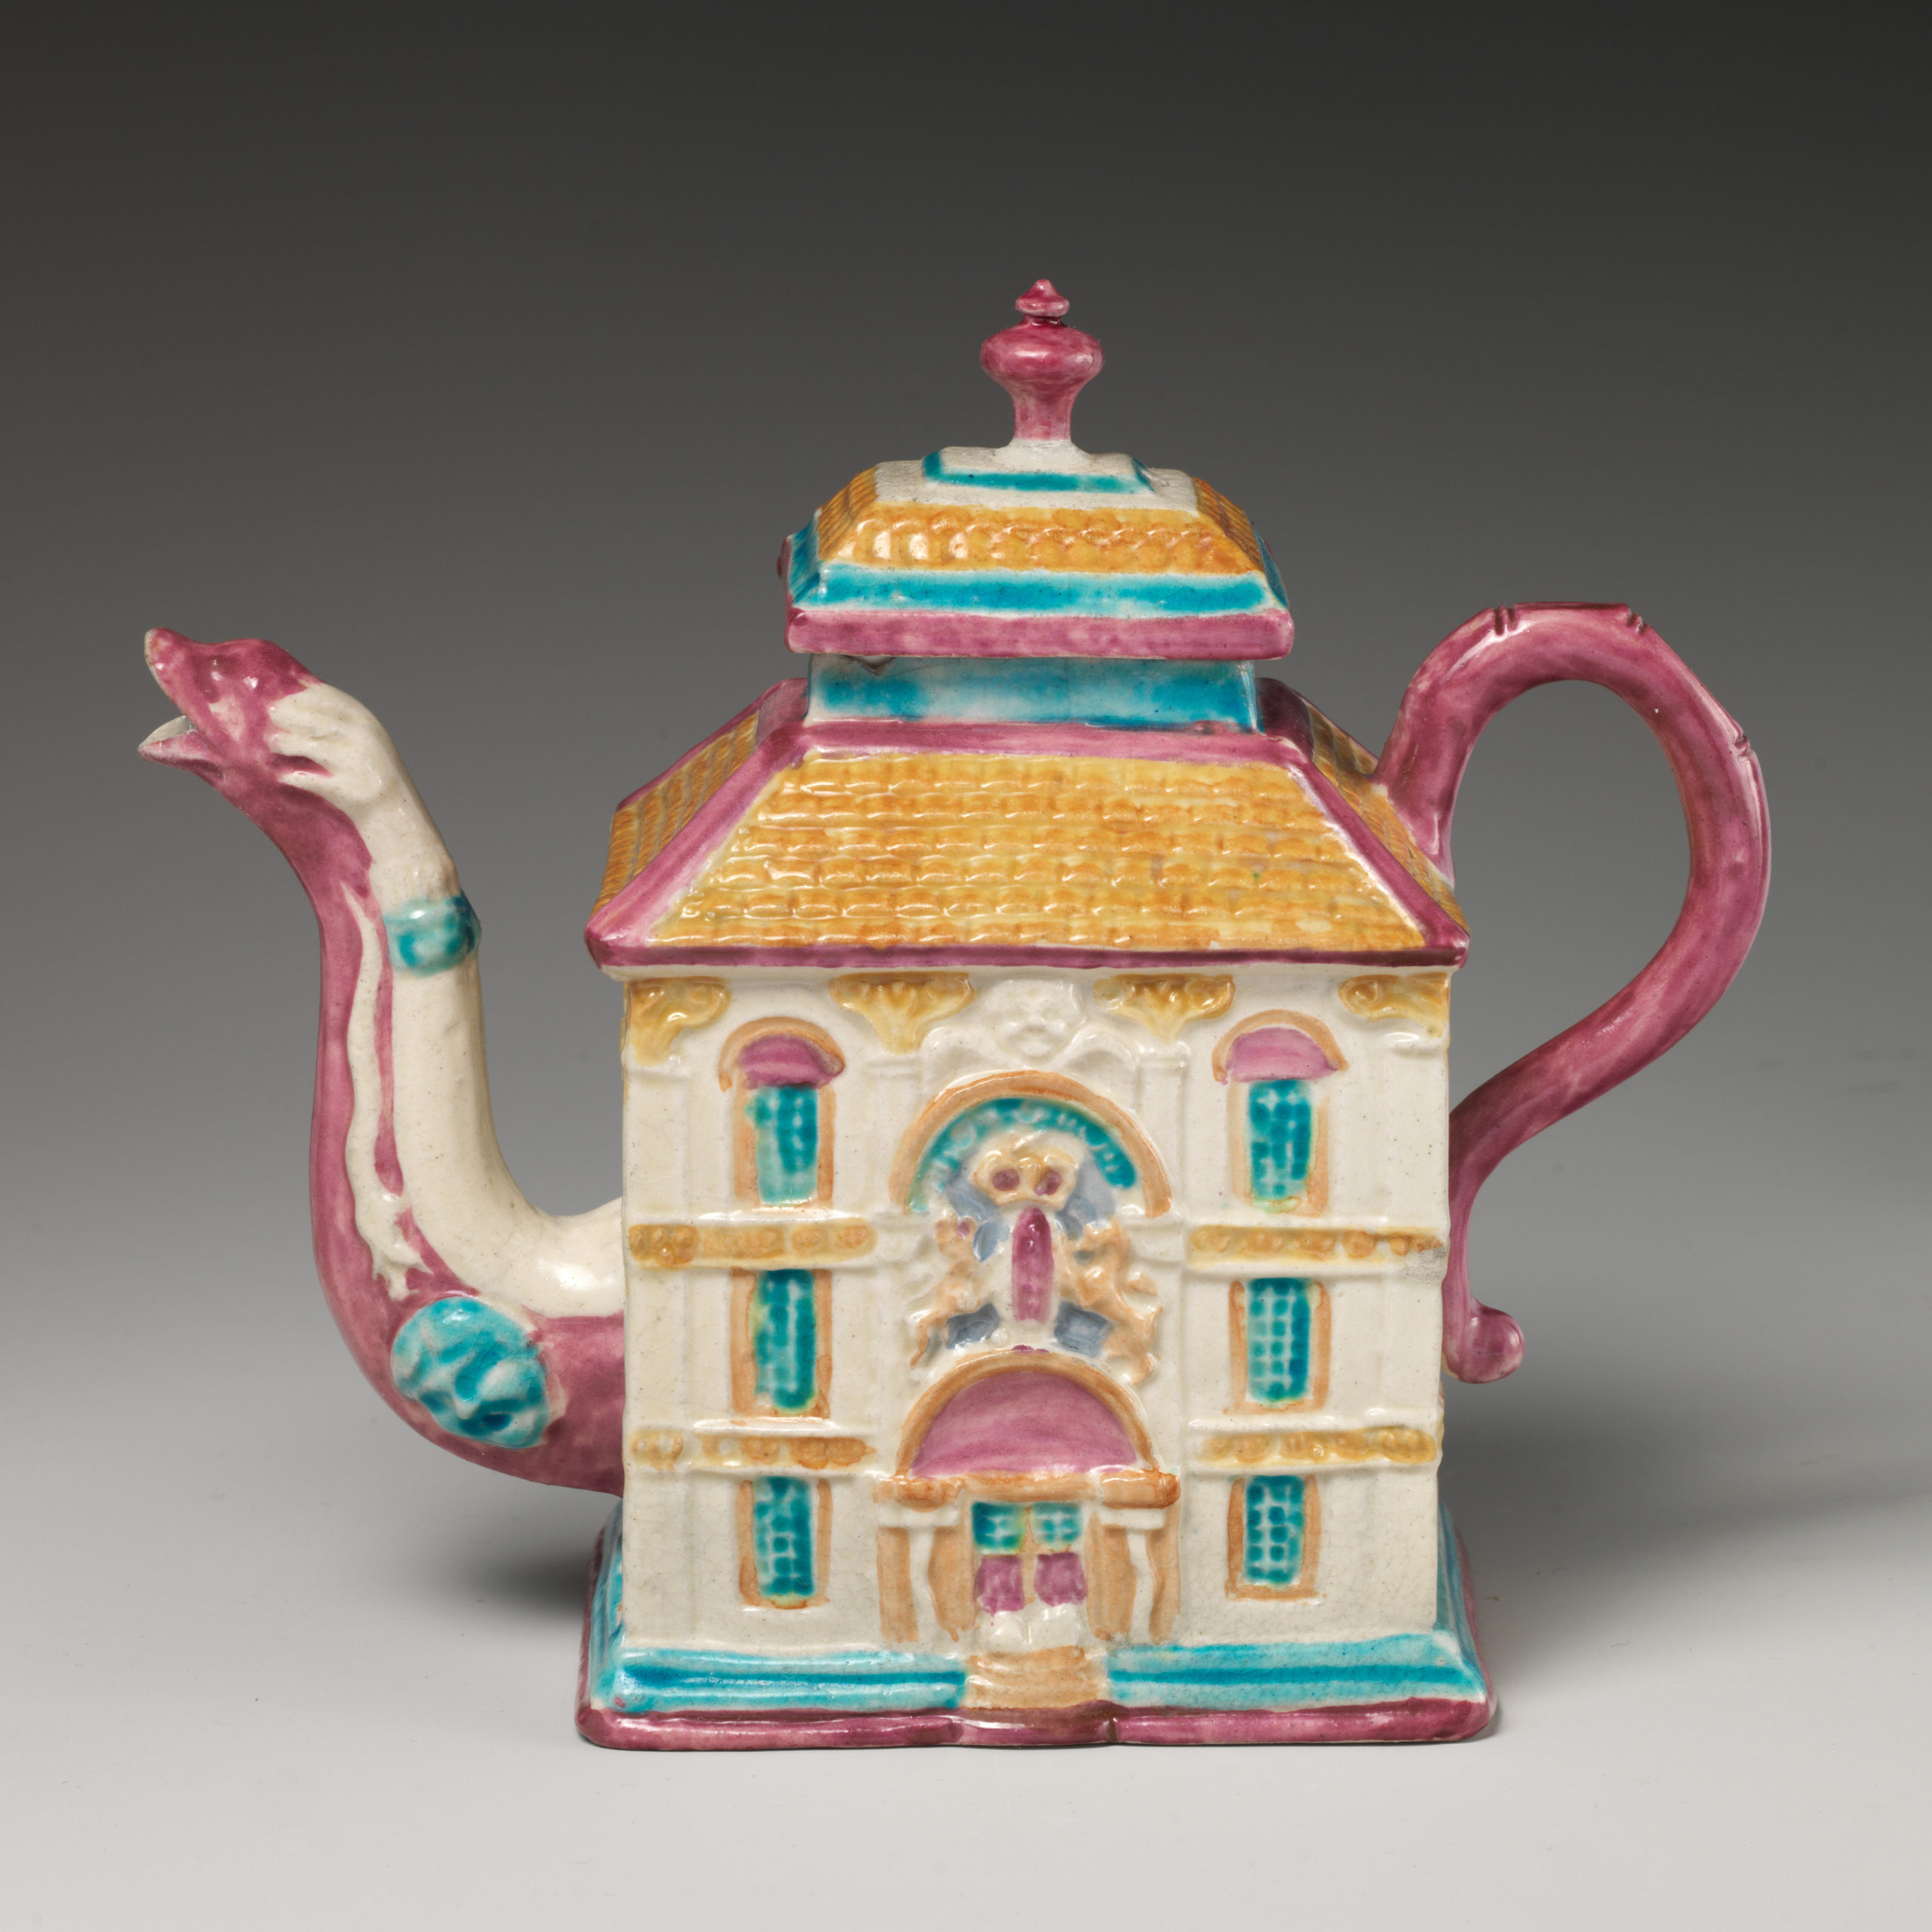 British, Staffordshire. Teapot, ca. 1755. The Metripolitan Museum of Art, New York